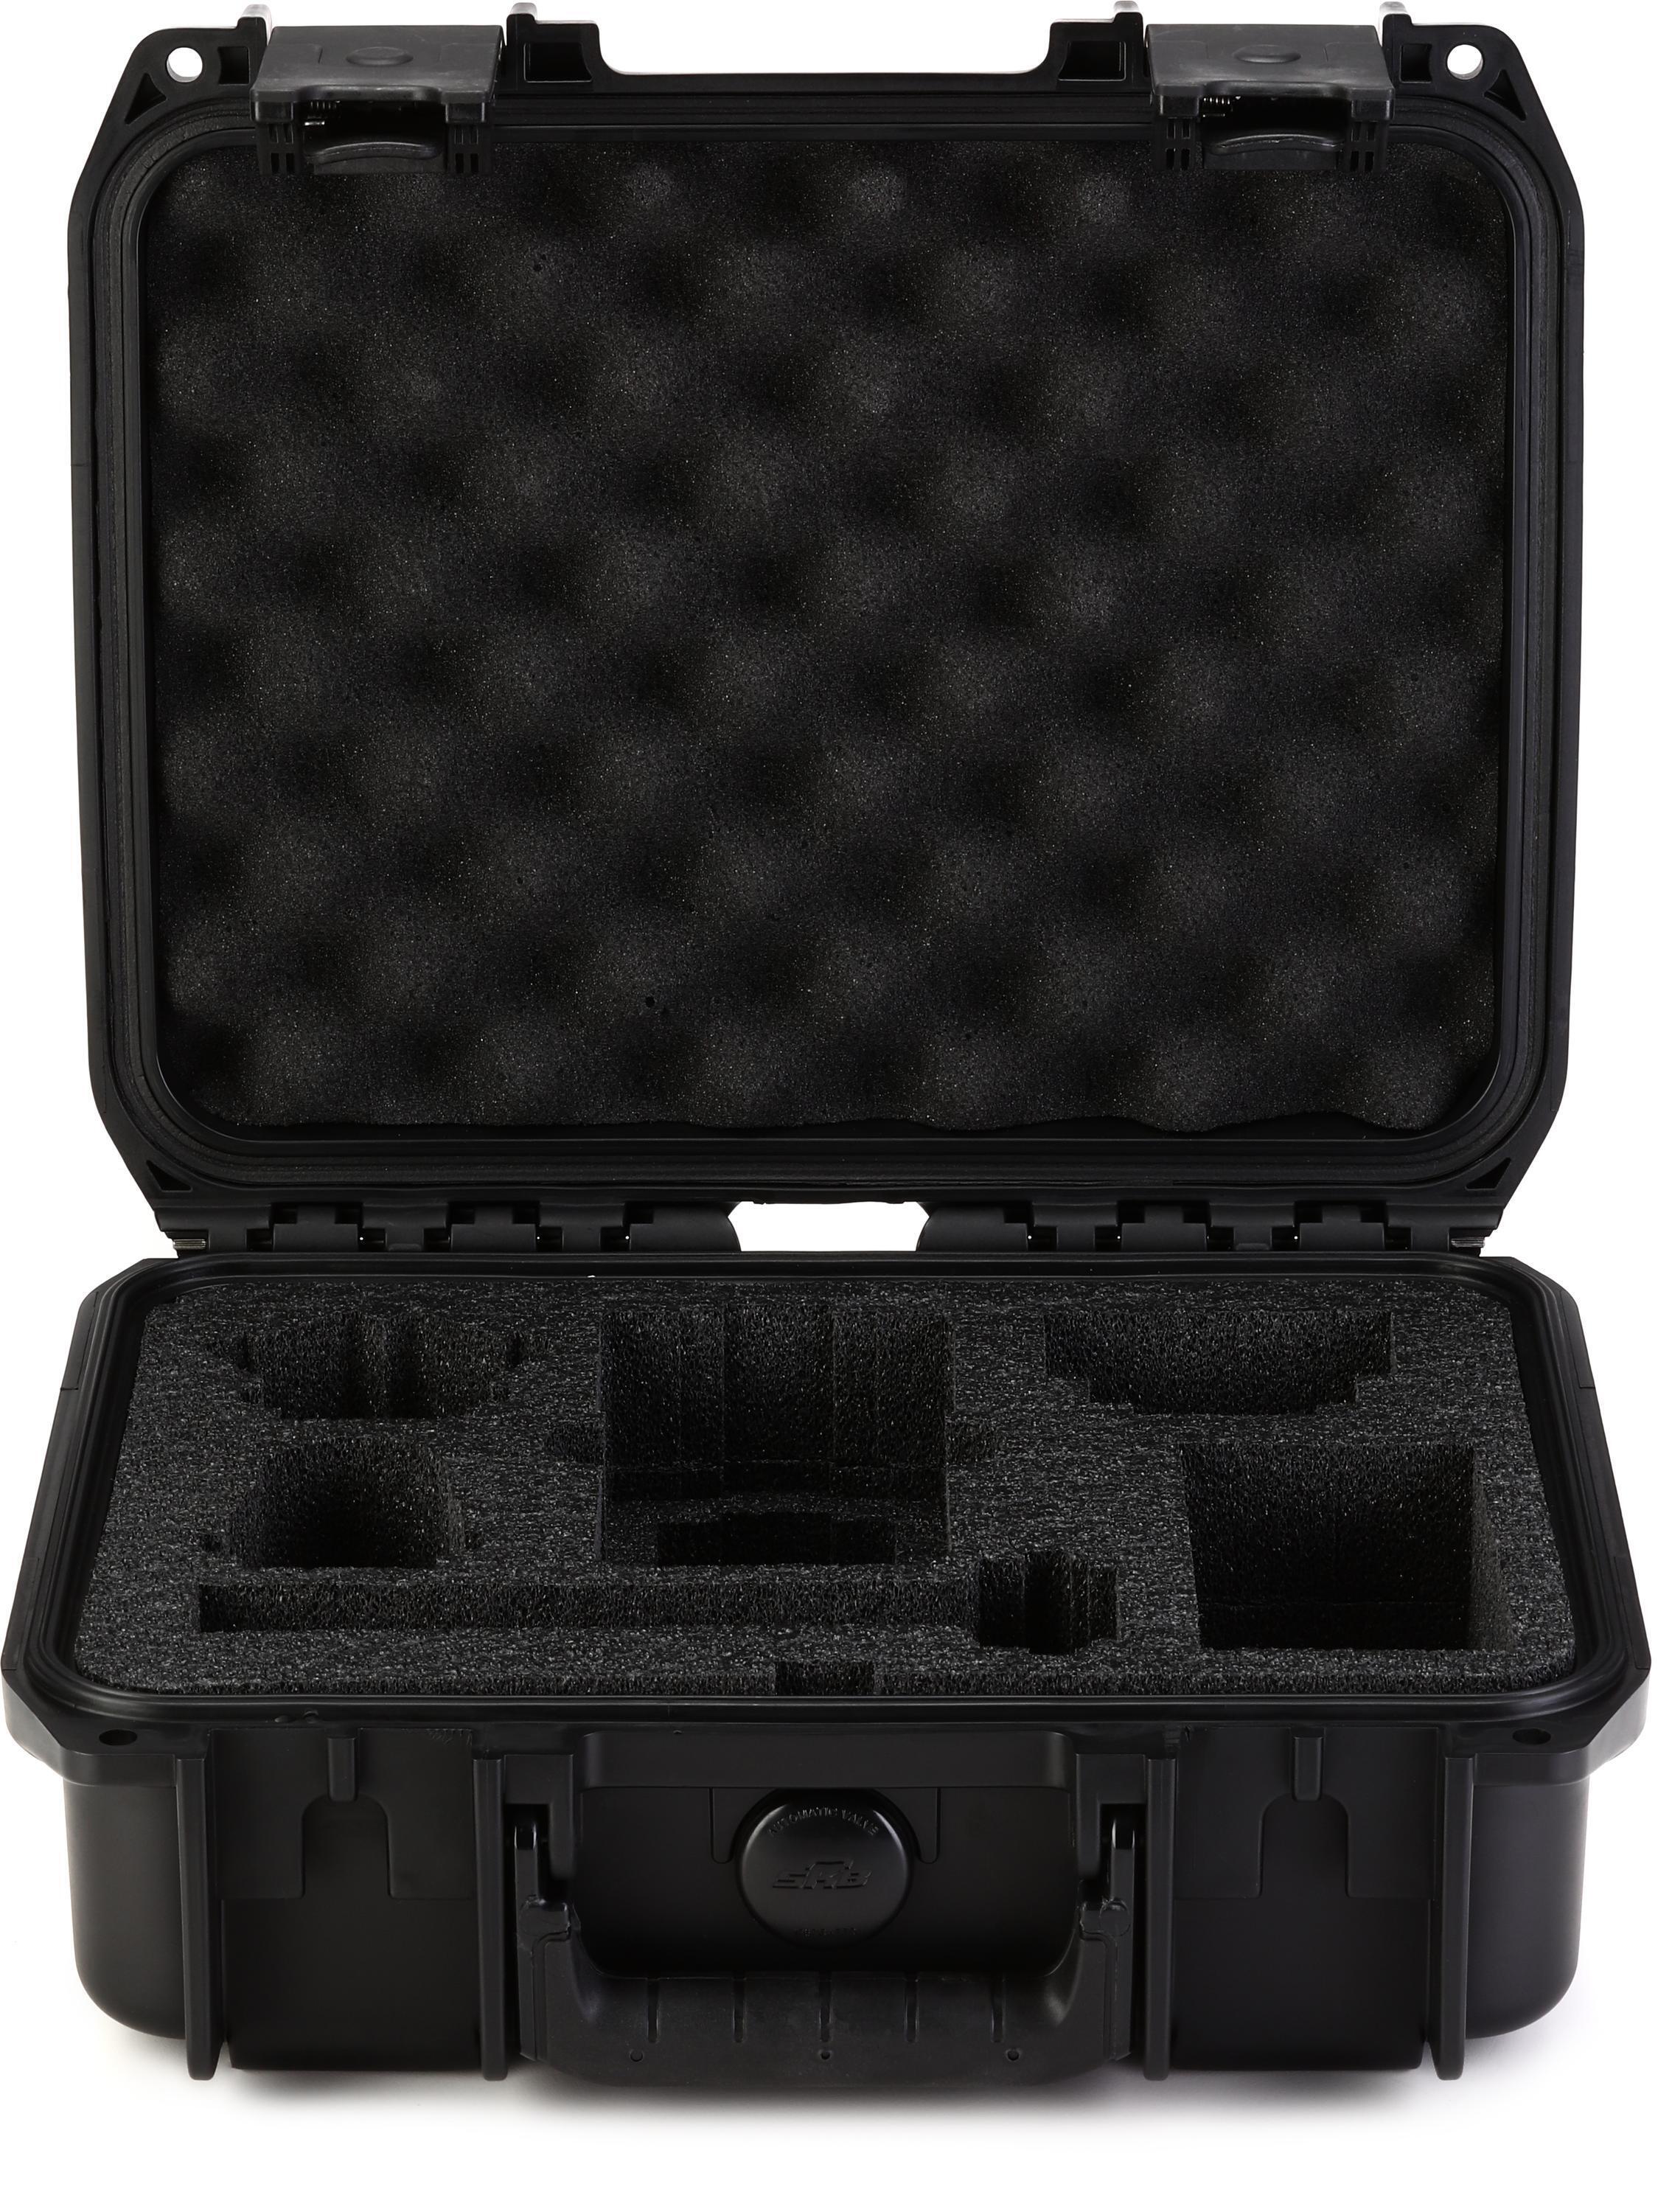 Bundled Item: SKB 3i-1209-4-H6B iSeries Waterproof Case for Zoom H6 Broadcast Recorder Kit